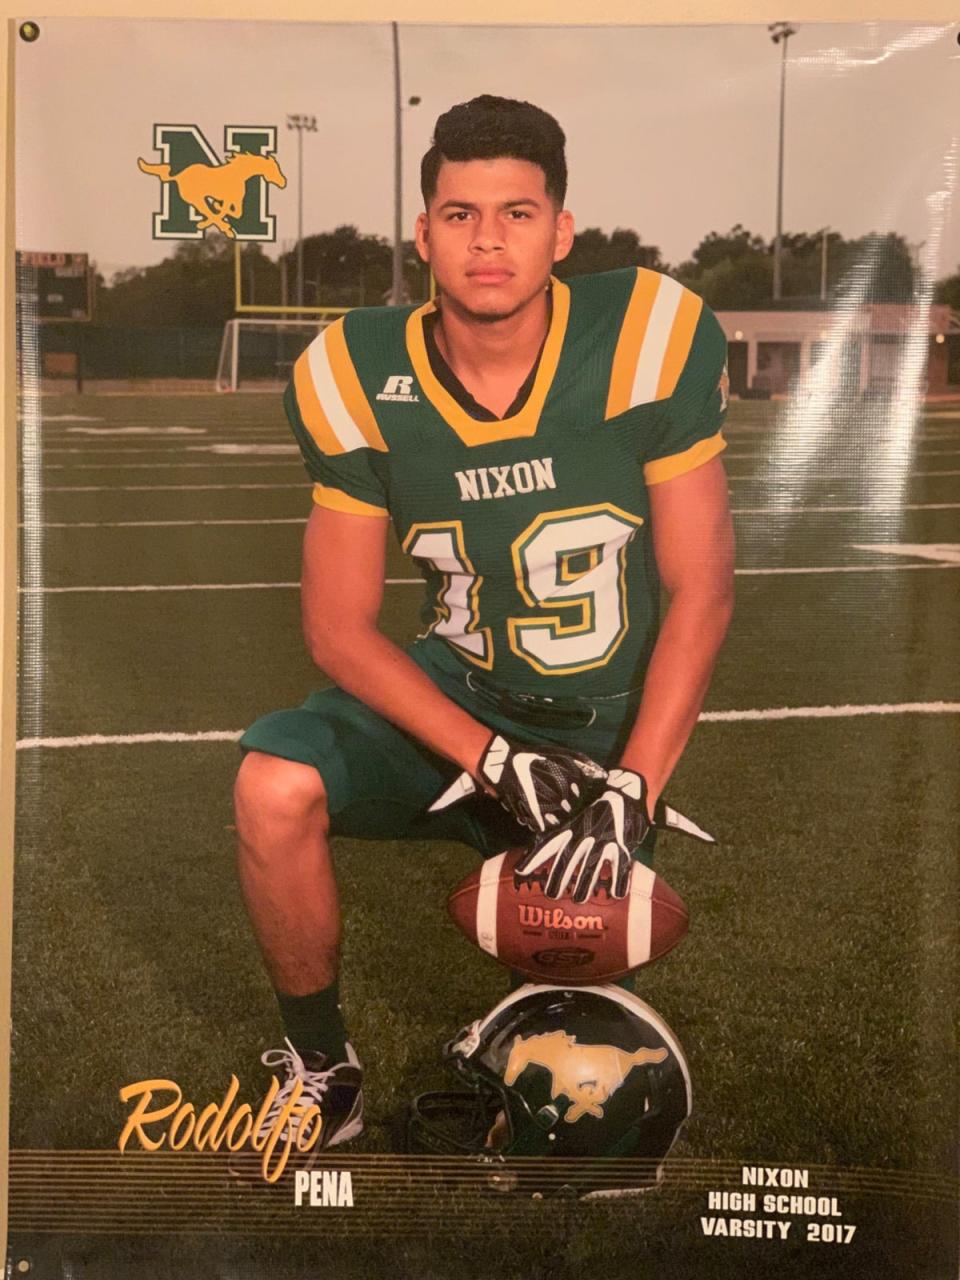 Rodolfo ‘Rudy’ Pena played football, basketball and track at Nixon High School in Laredo Texas (Courtesy of Pena family)